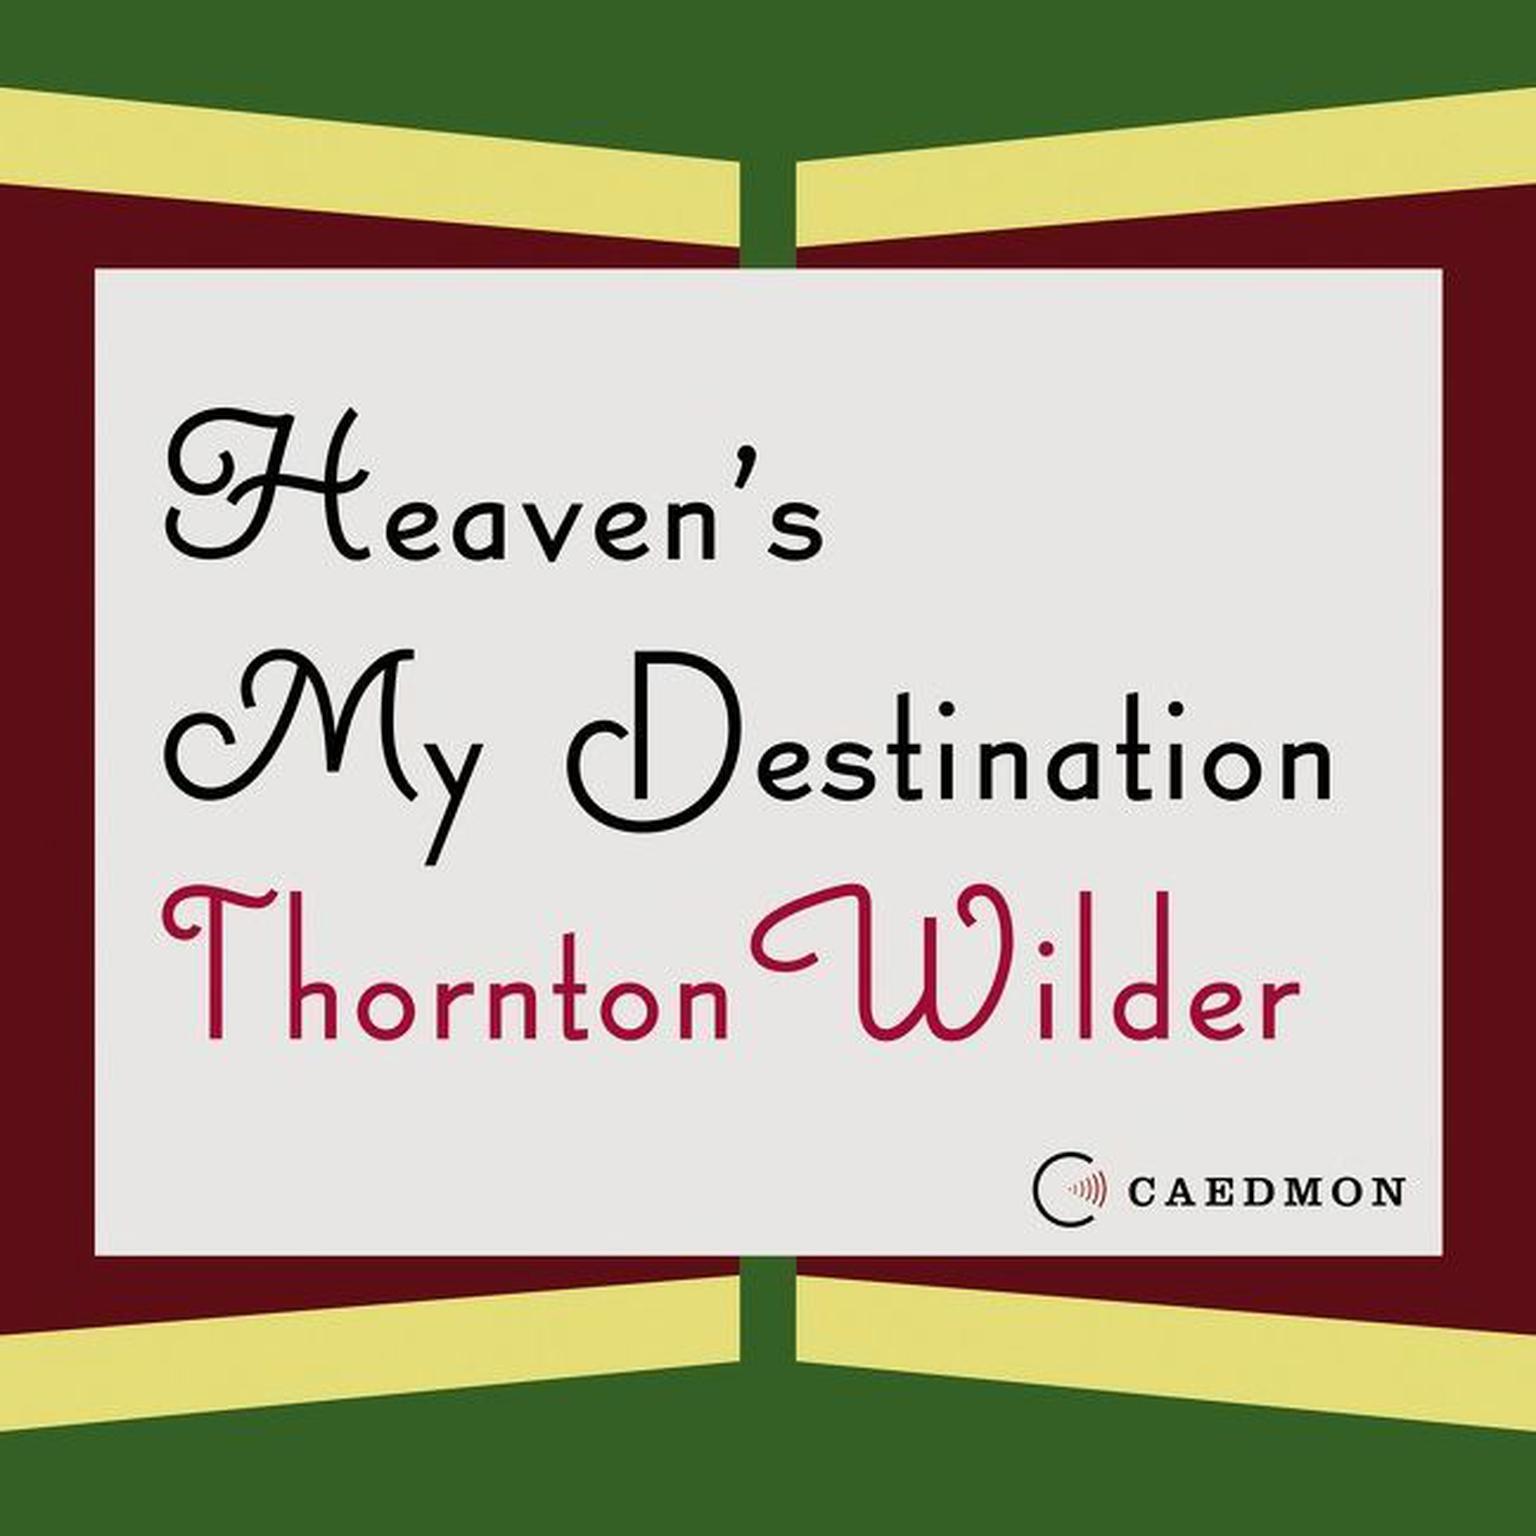 Heavens My Destination: A Novel Audiobook, by Thornton Wilder